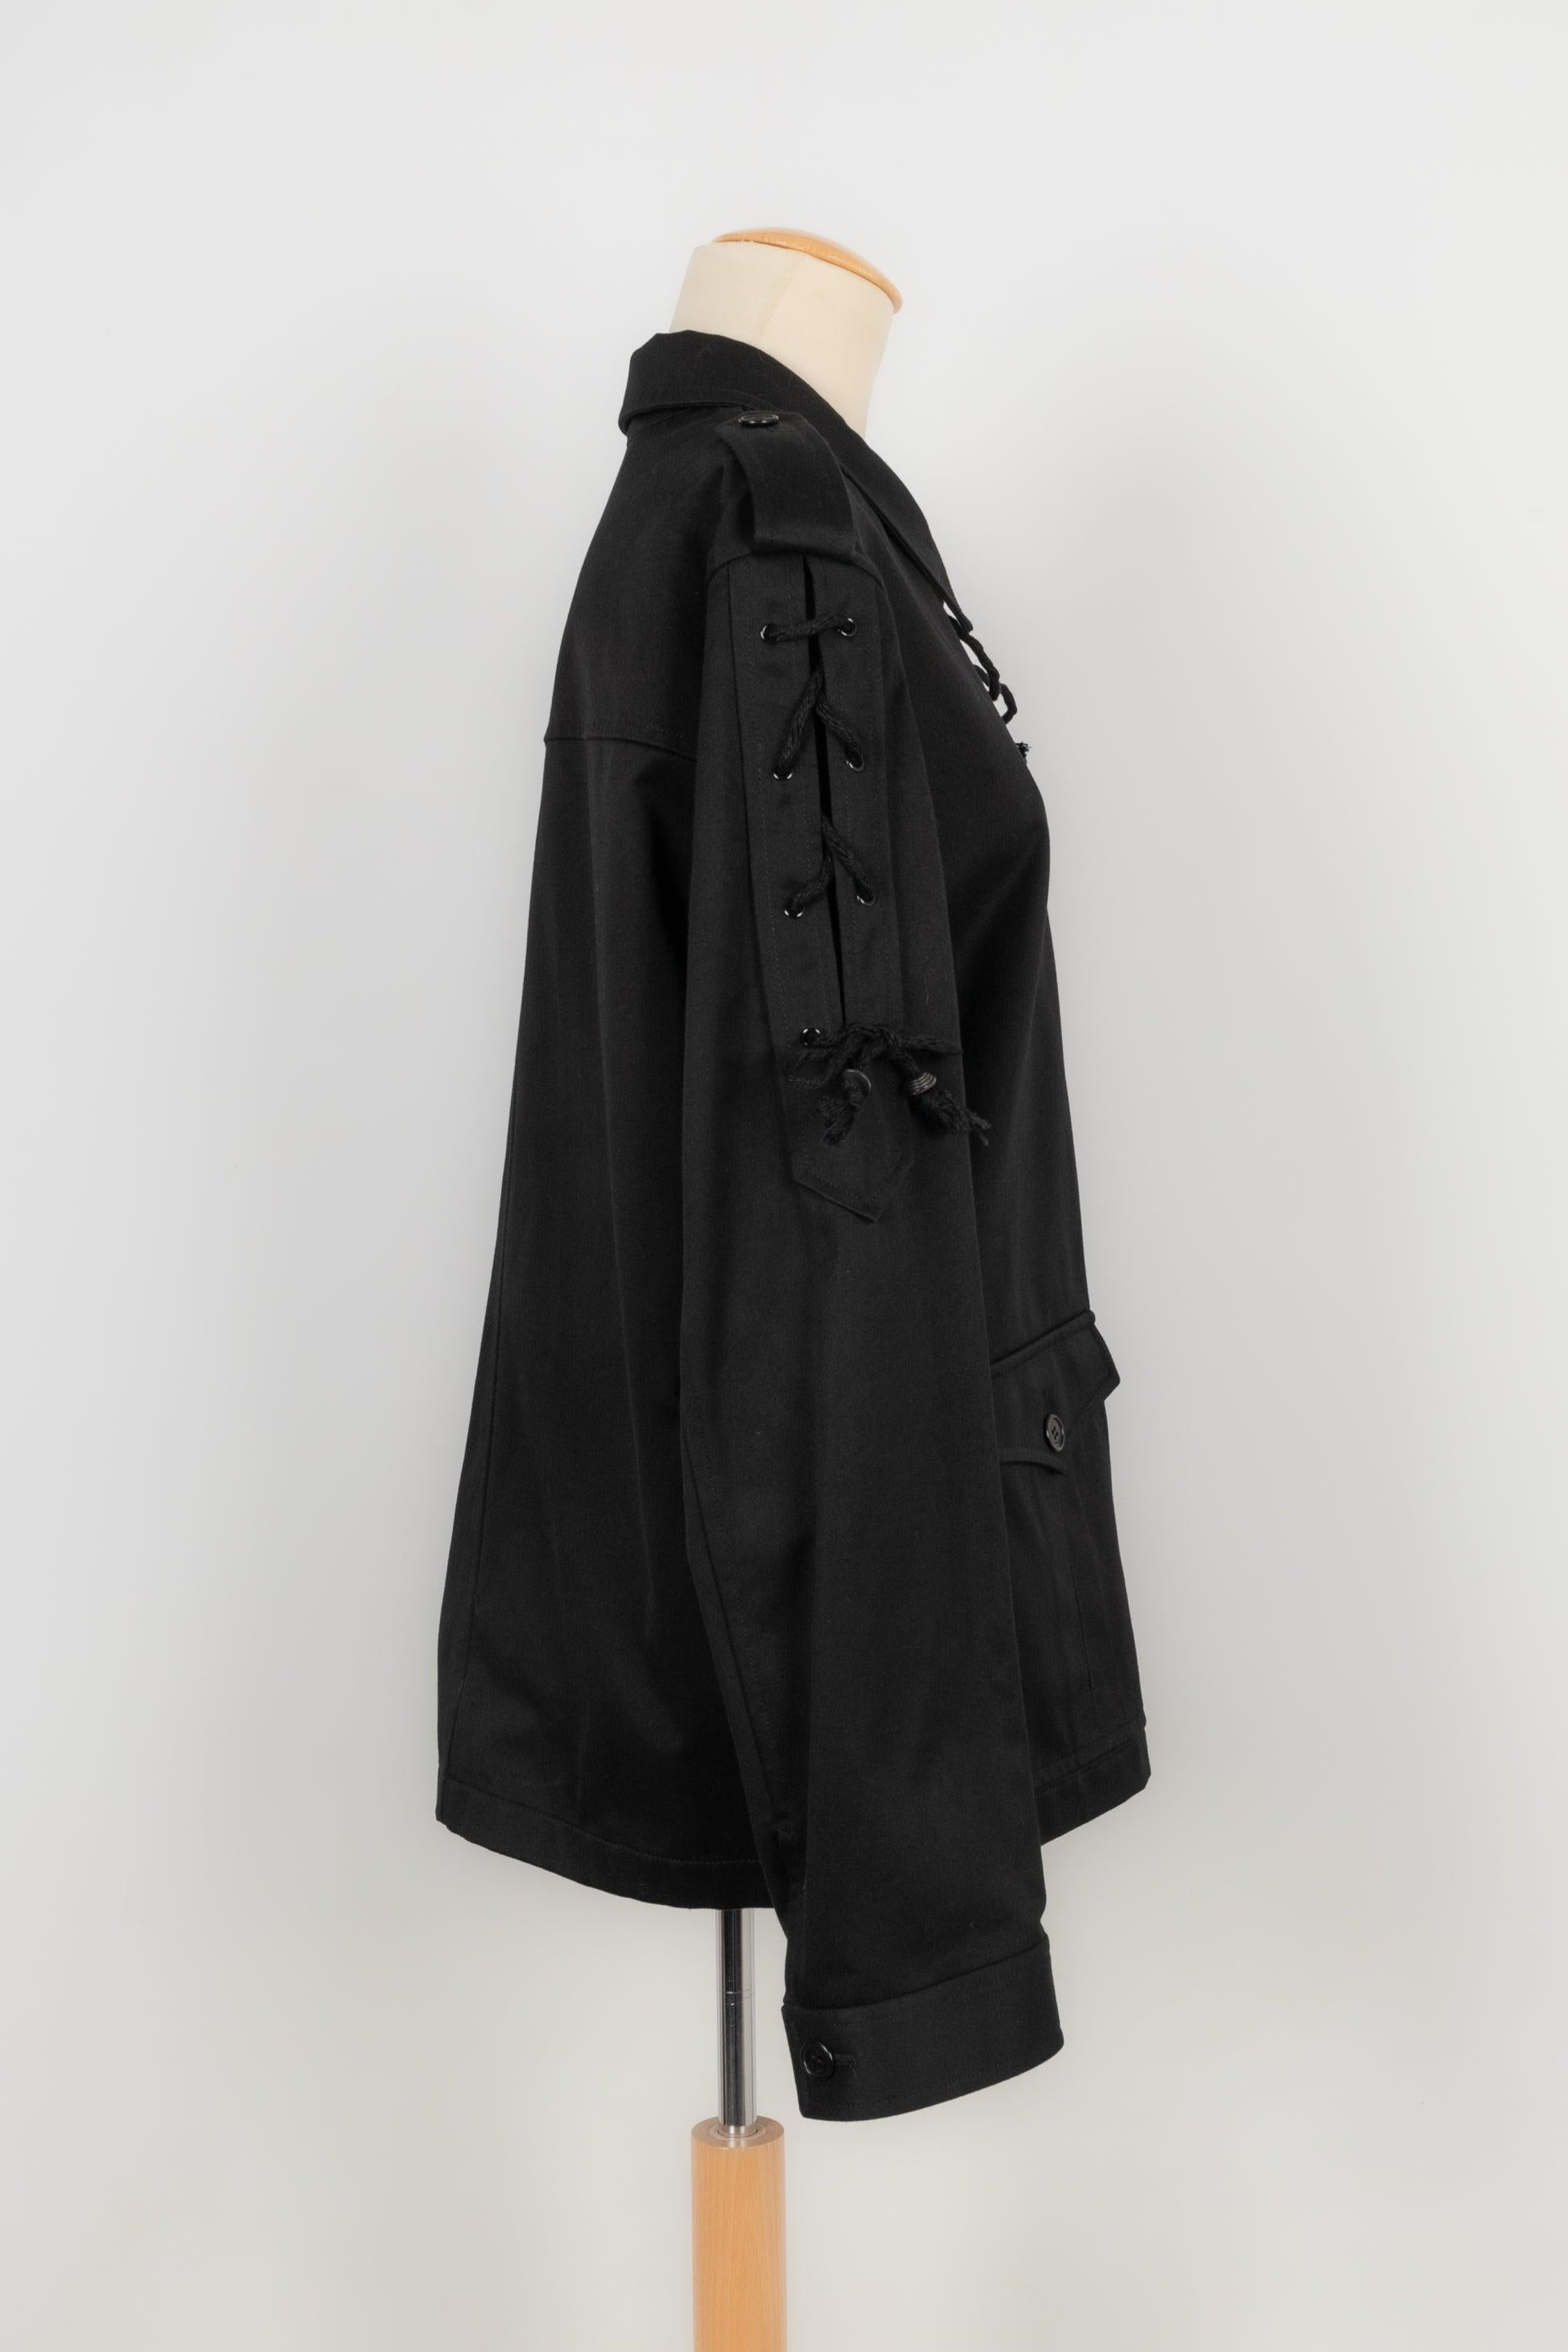 Saint Laurent Black Cotton Mid-Length Jacket Spring 40FR, 2019 1